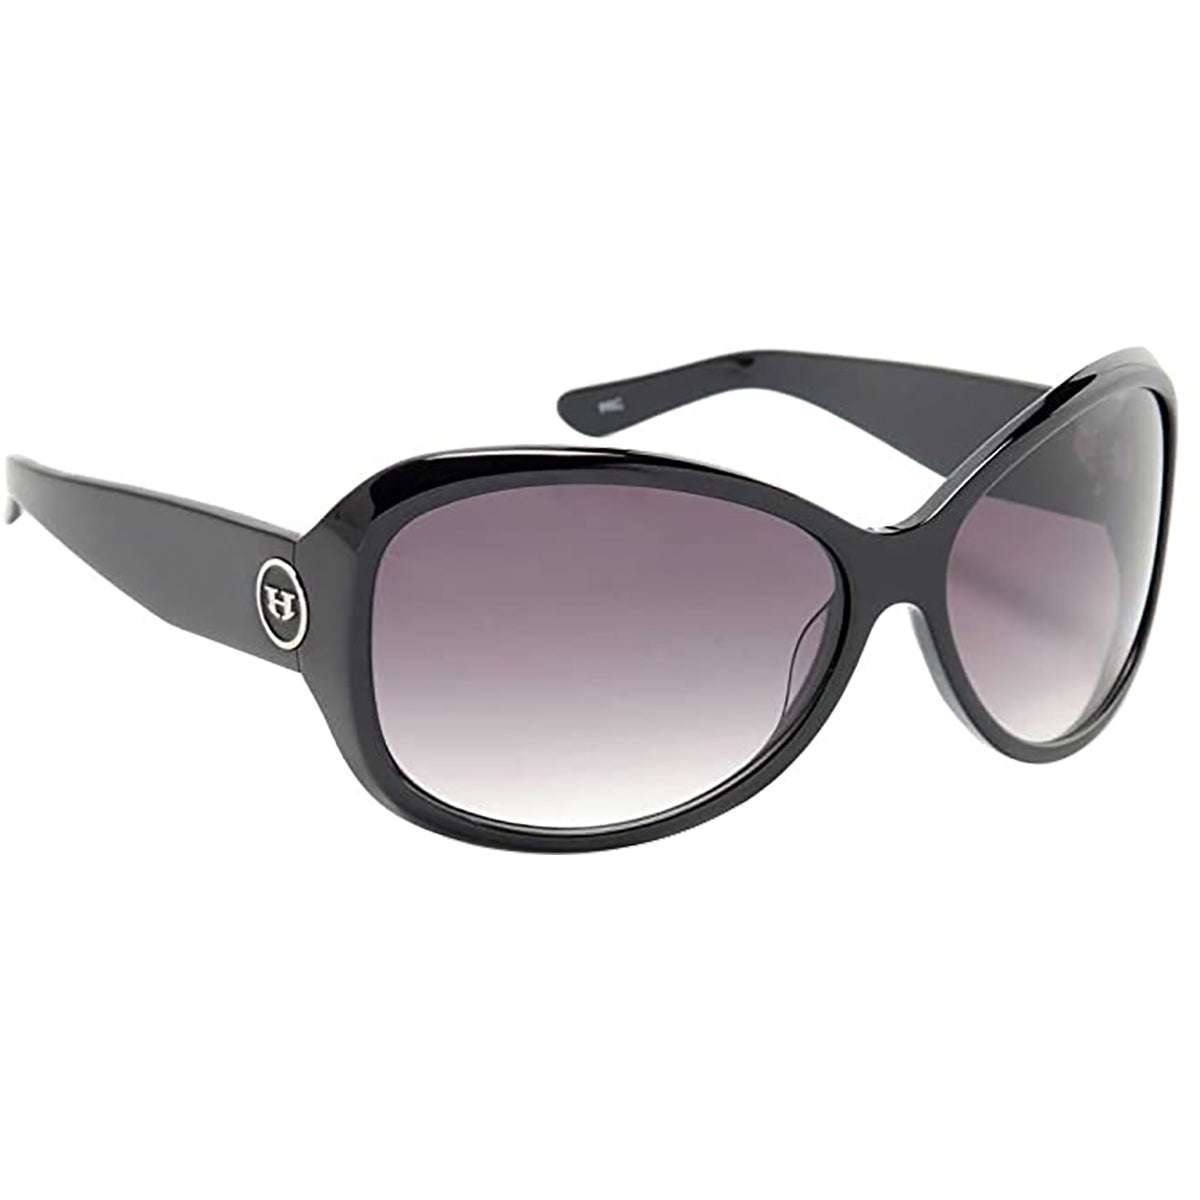 Hoven Mascara Women's Lifestyle Sunglasses-45-01071